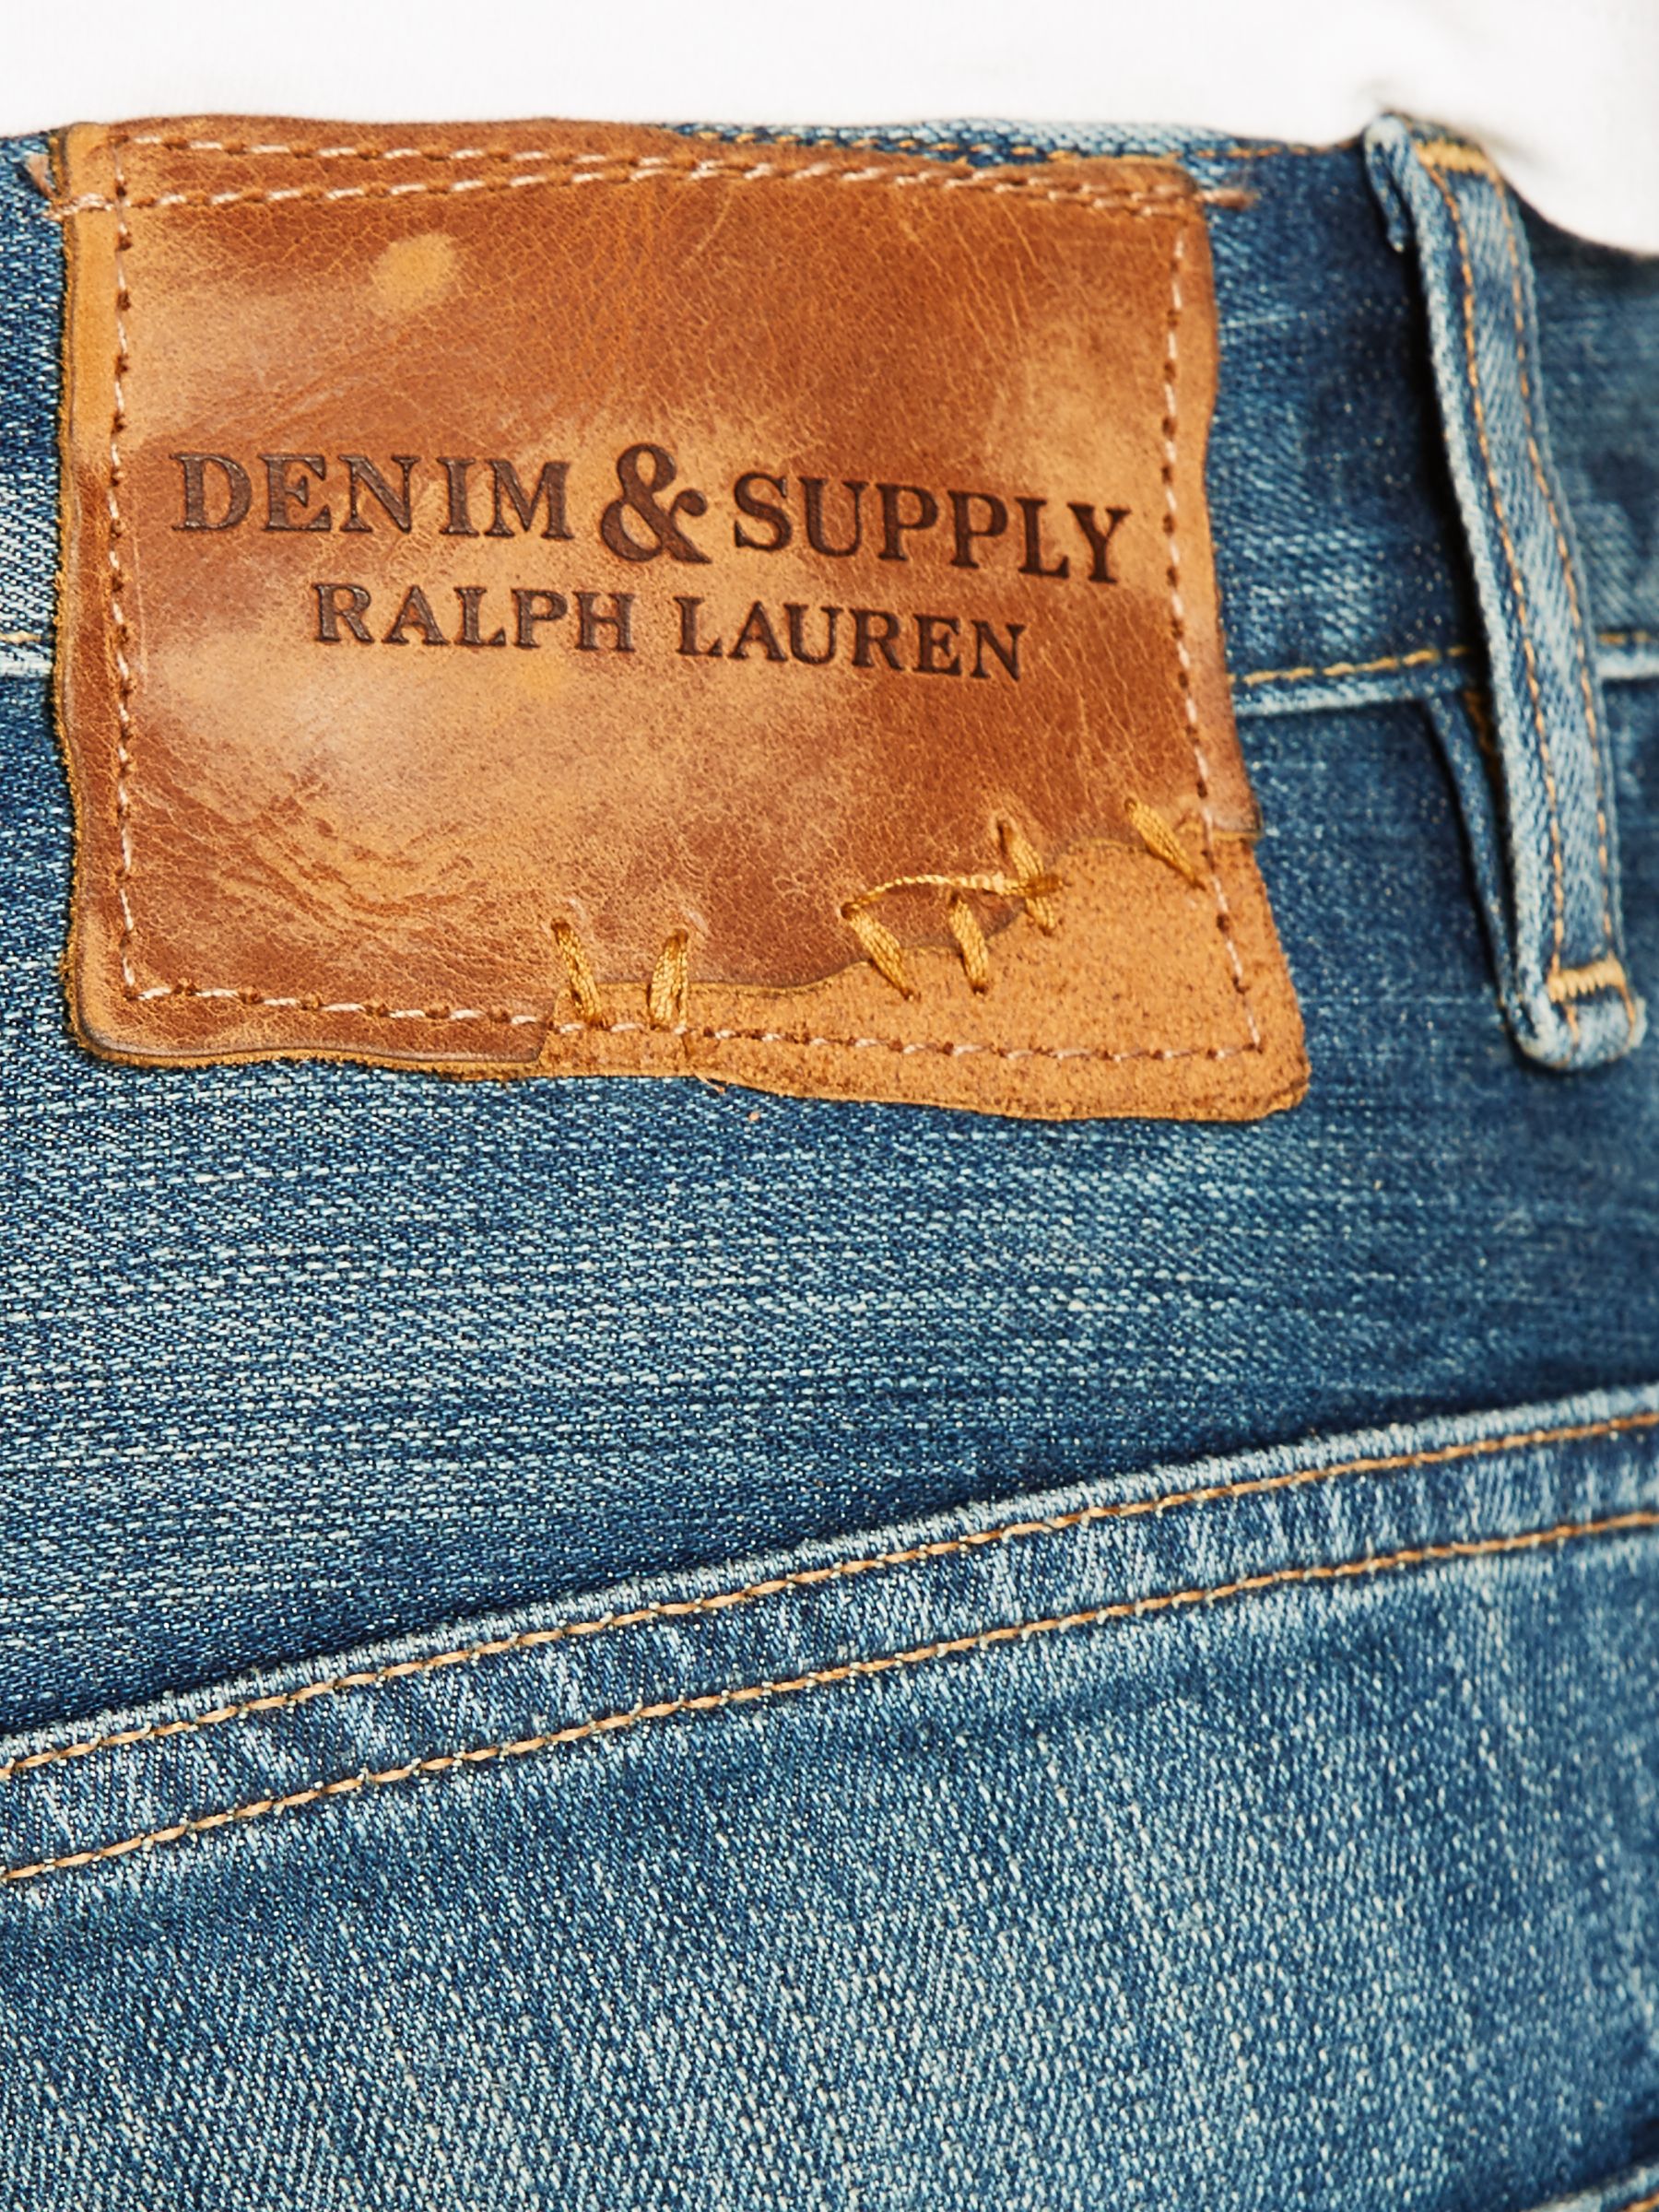 ralph lauren jeans denim and supply